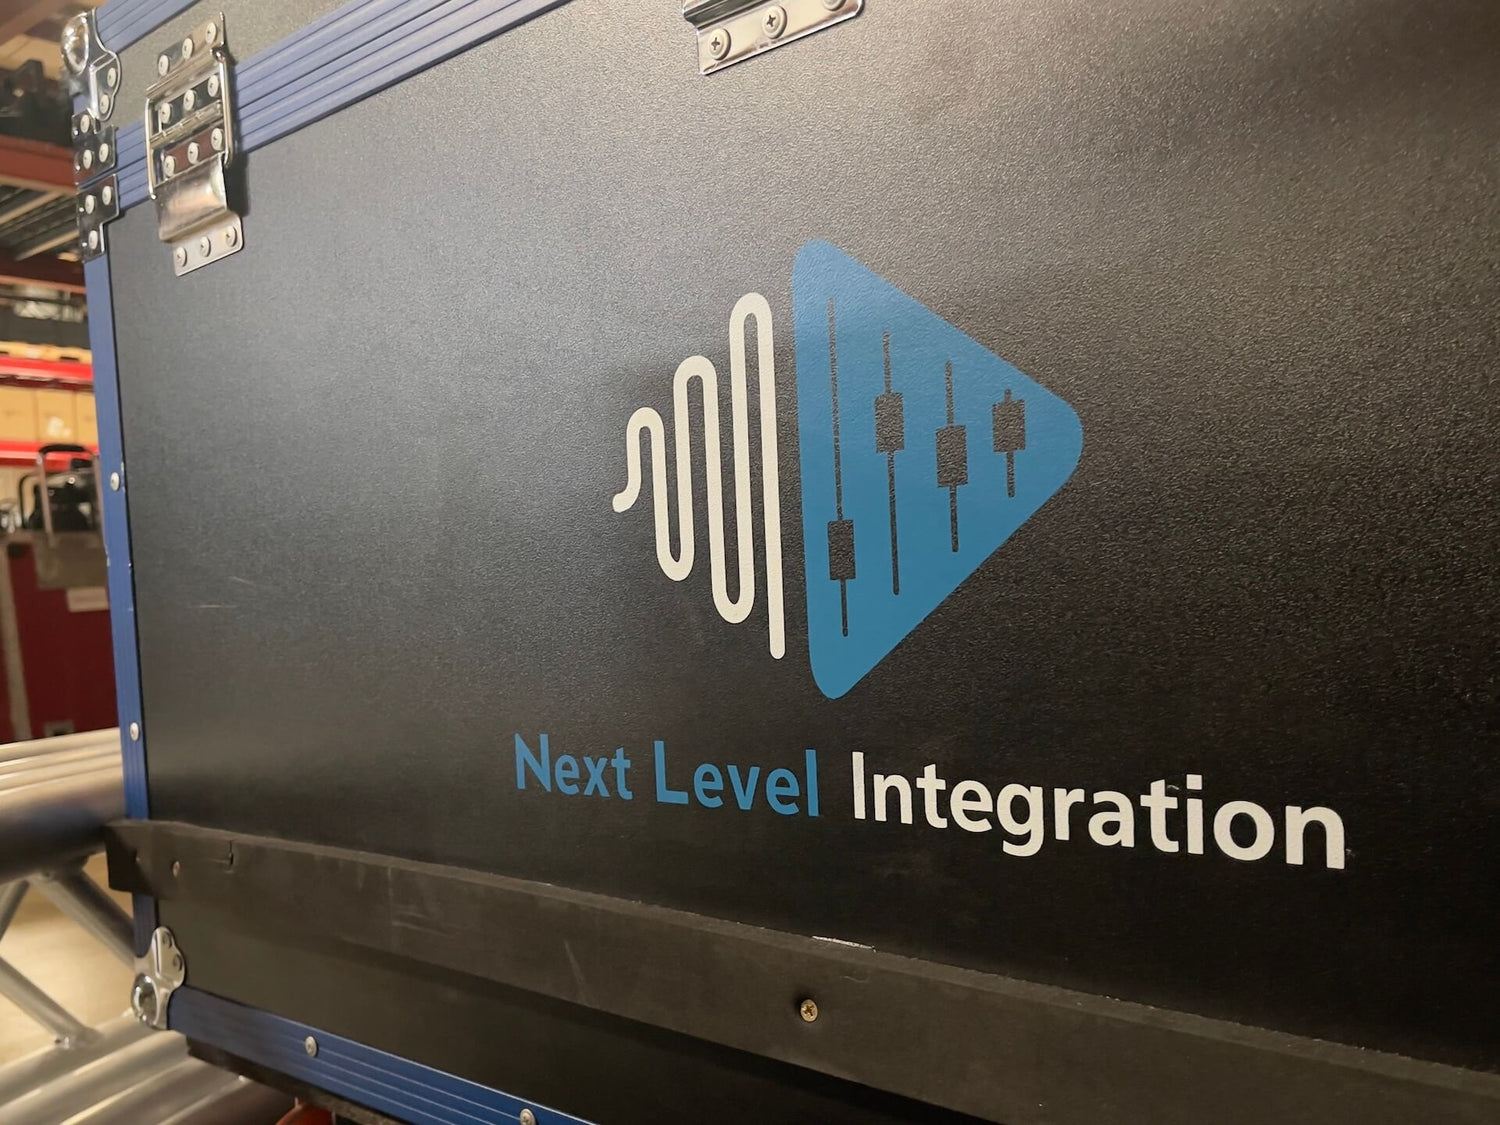 Next Level Integration logo on a road case